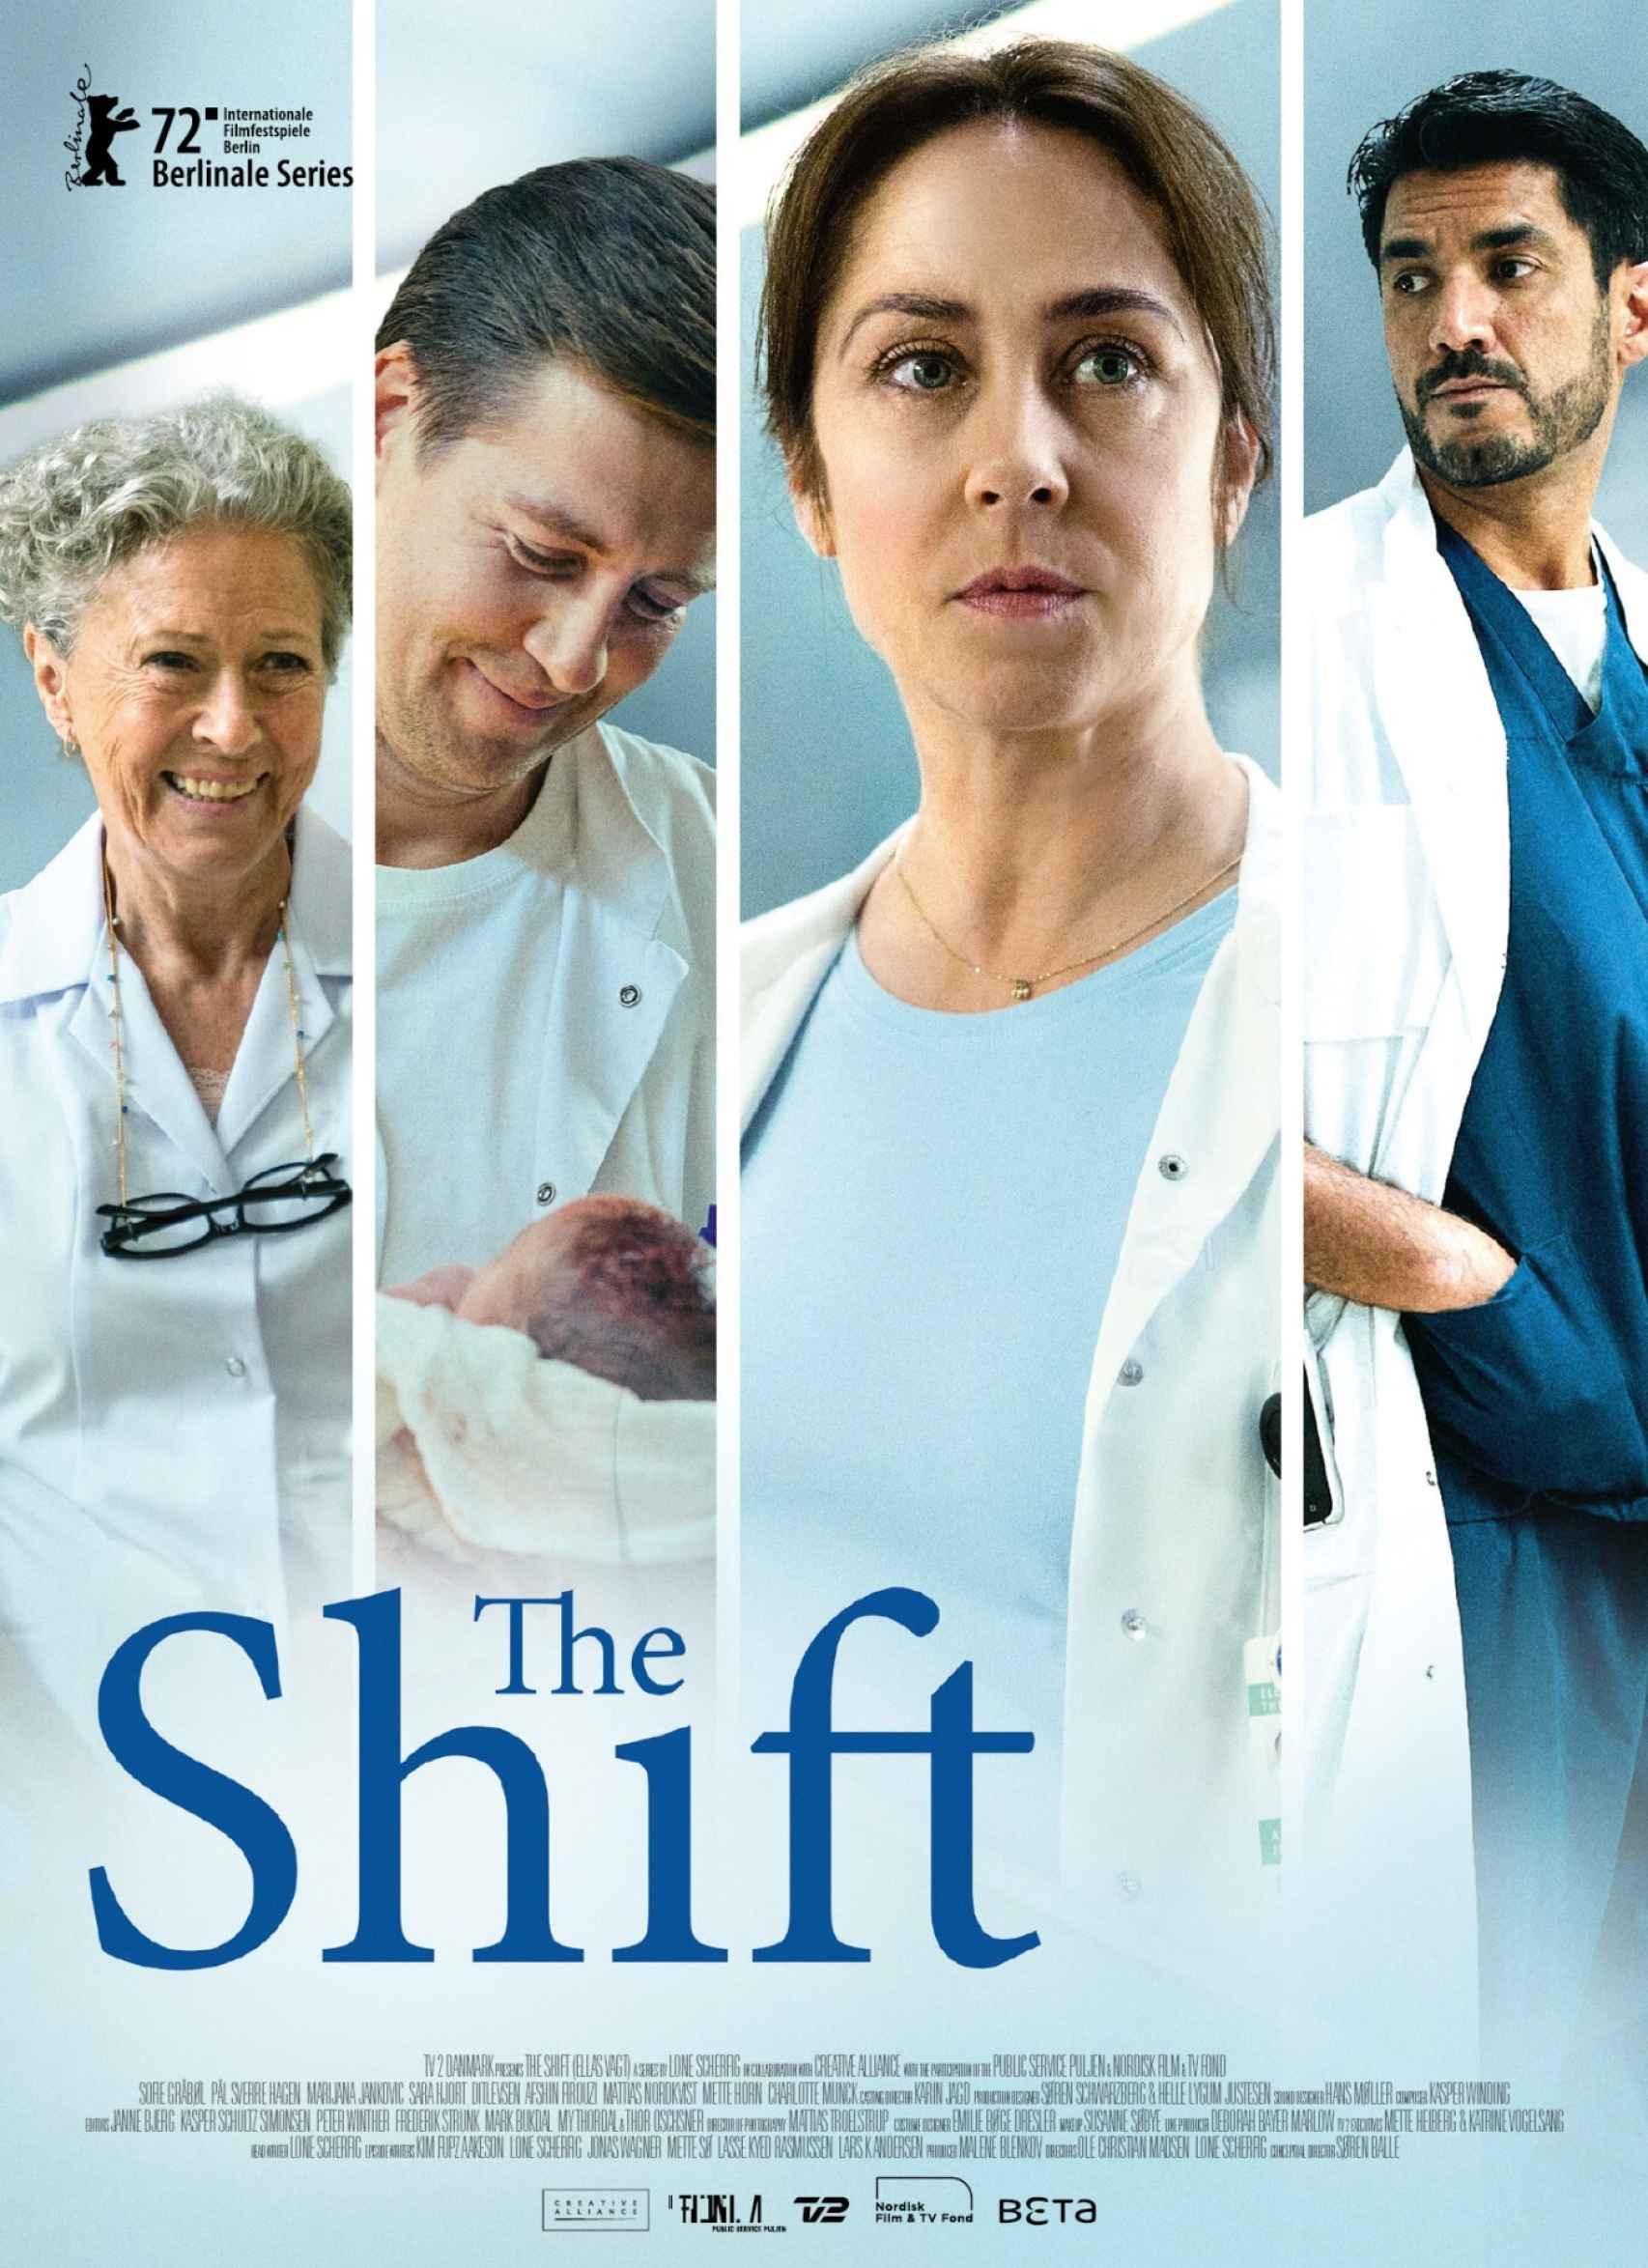 Cartel promocional de la serie 'The Shift'.